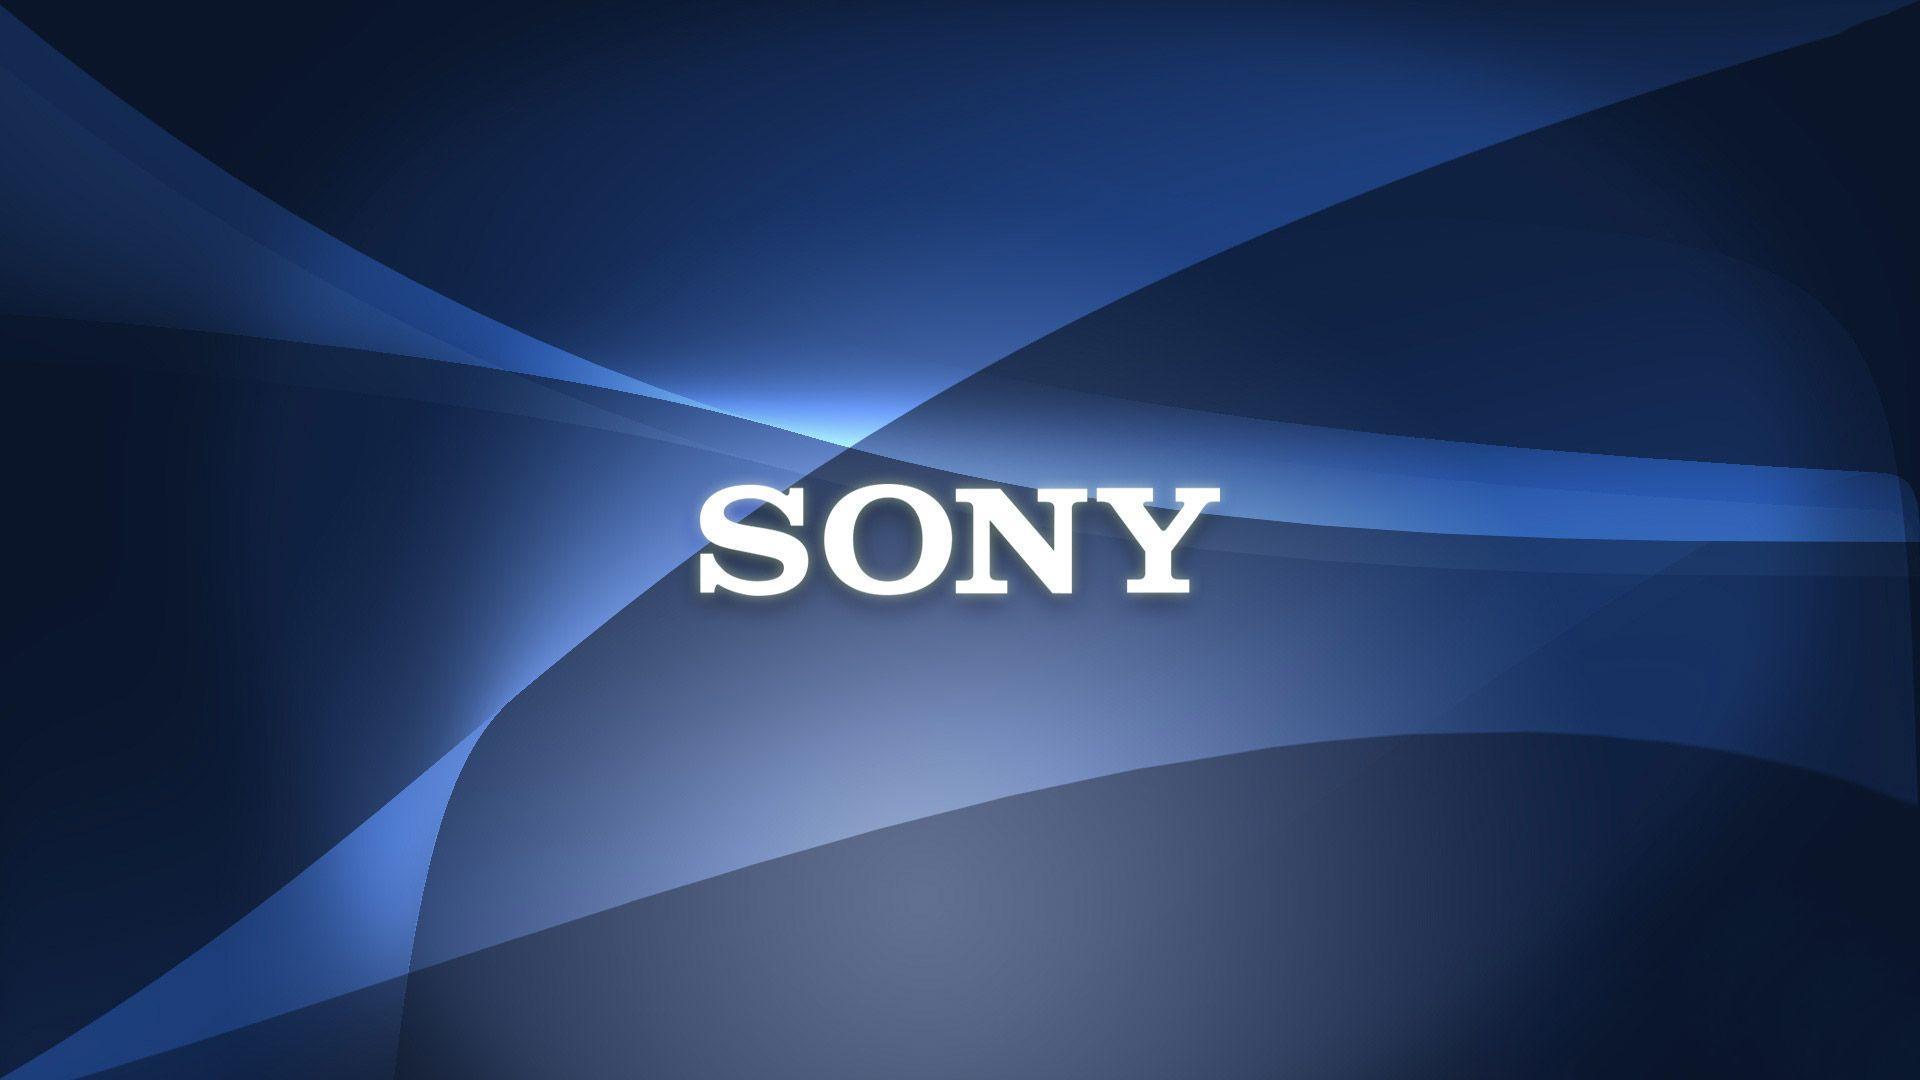 Sony Logo Animation - YouTube | Sony, Sony led tv, Sony led